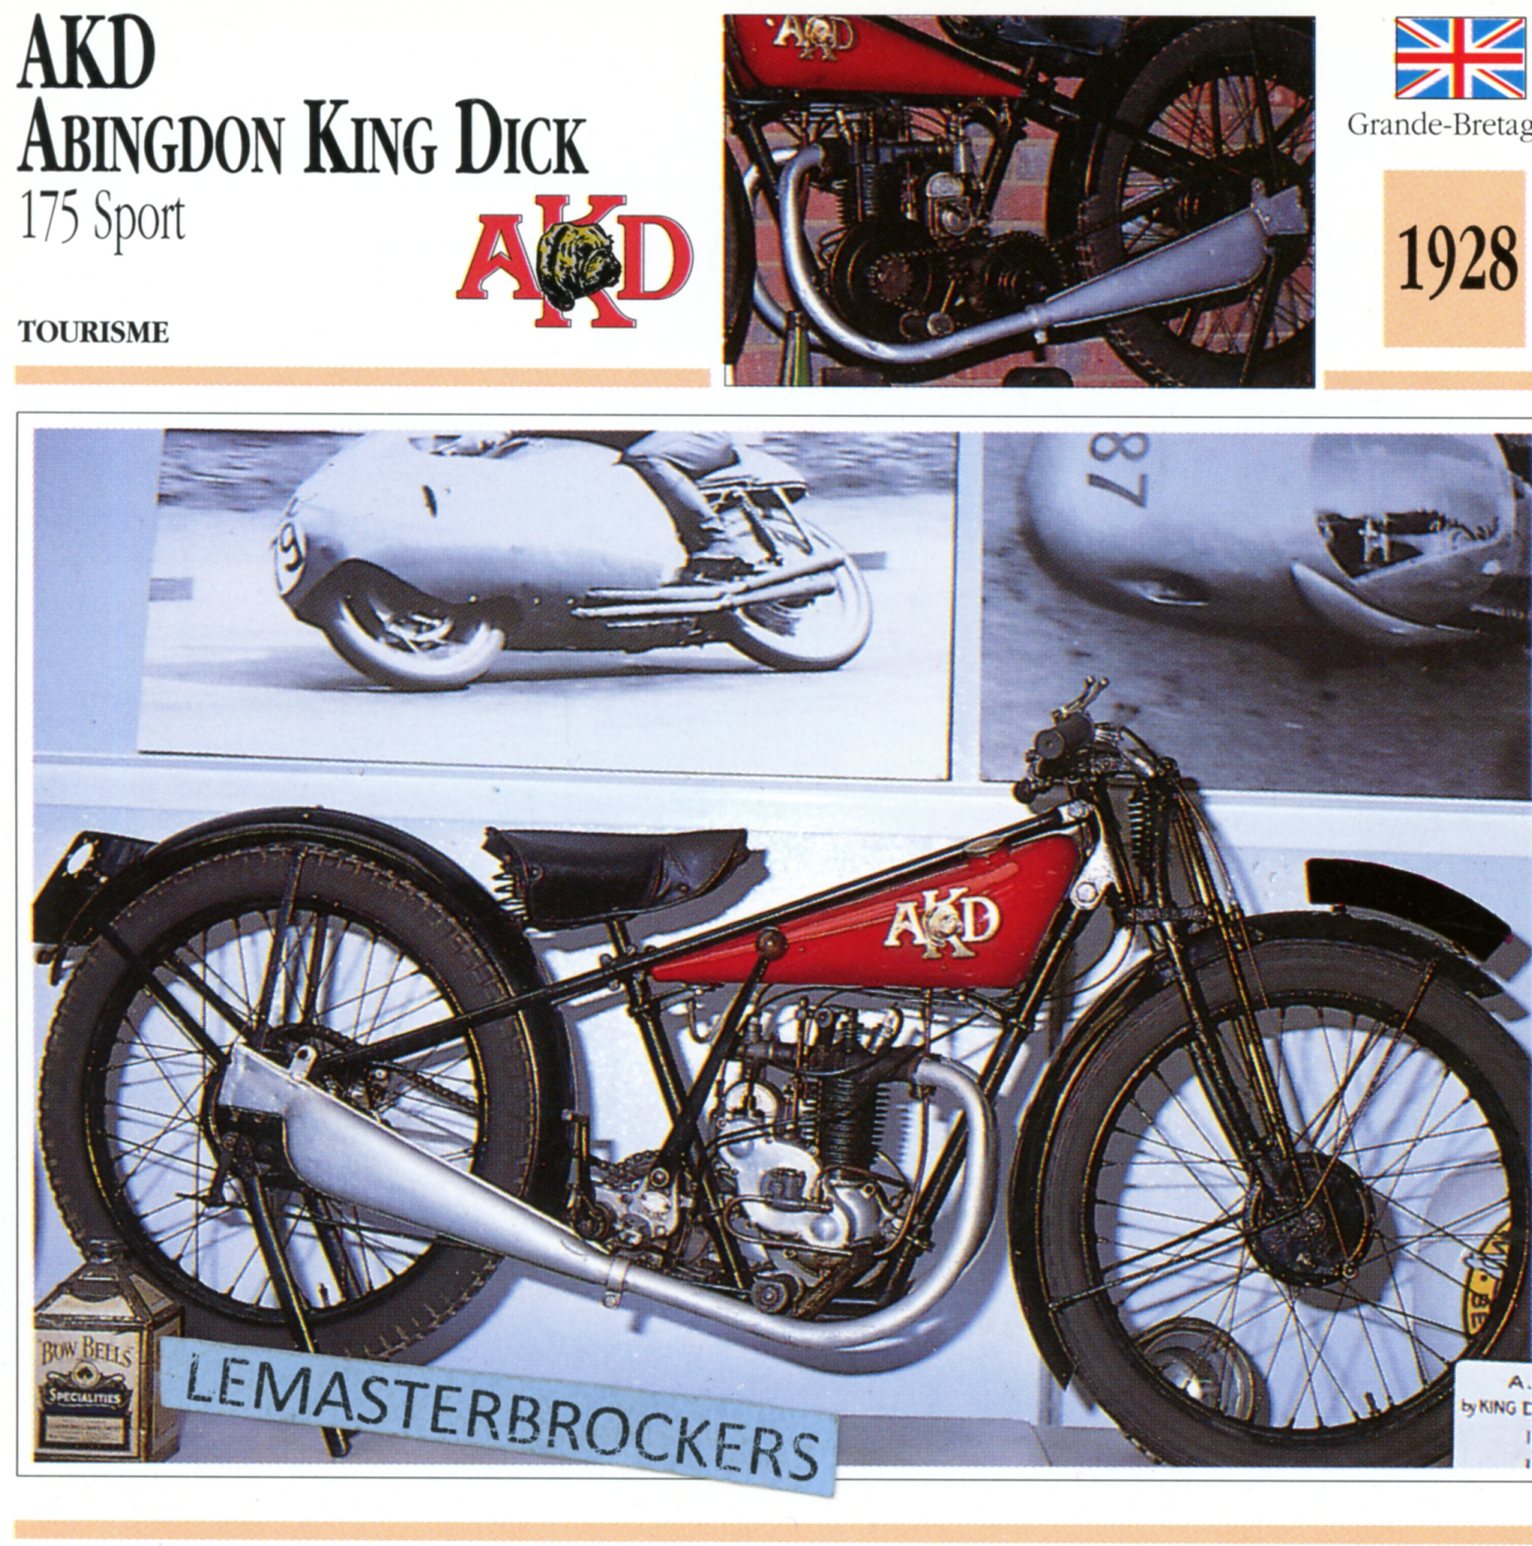 AKD ABINGDON KING DICK 175 SPORT  - 1928 - CARTE CARD FICHE MOTO CARACTERISTIQUES